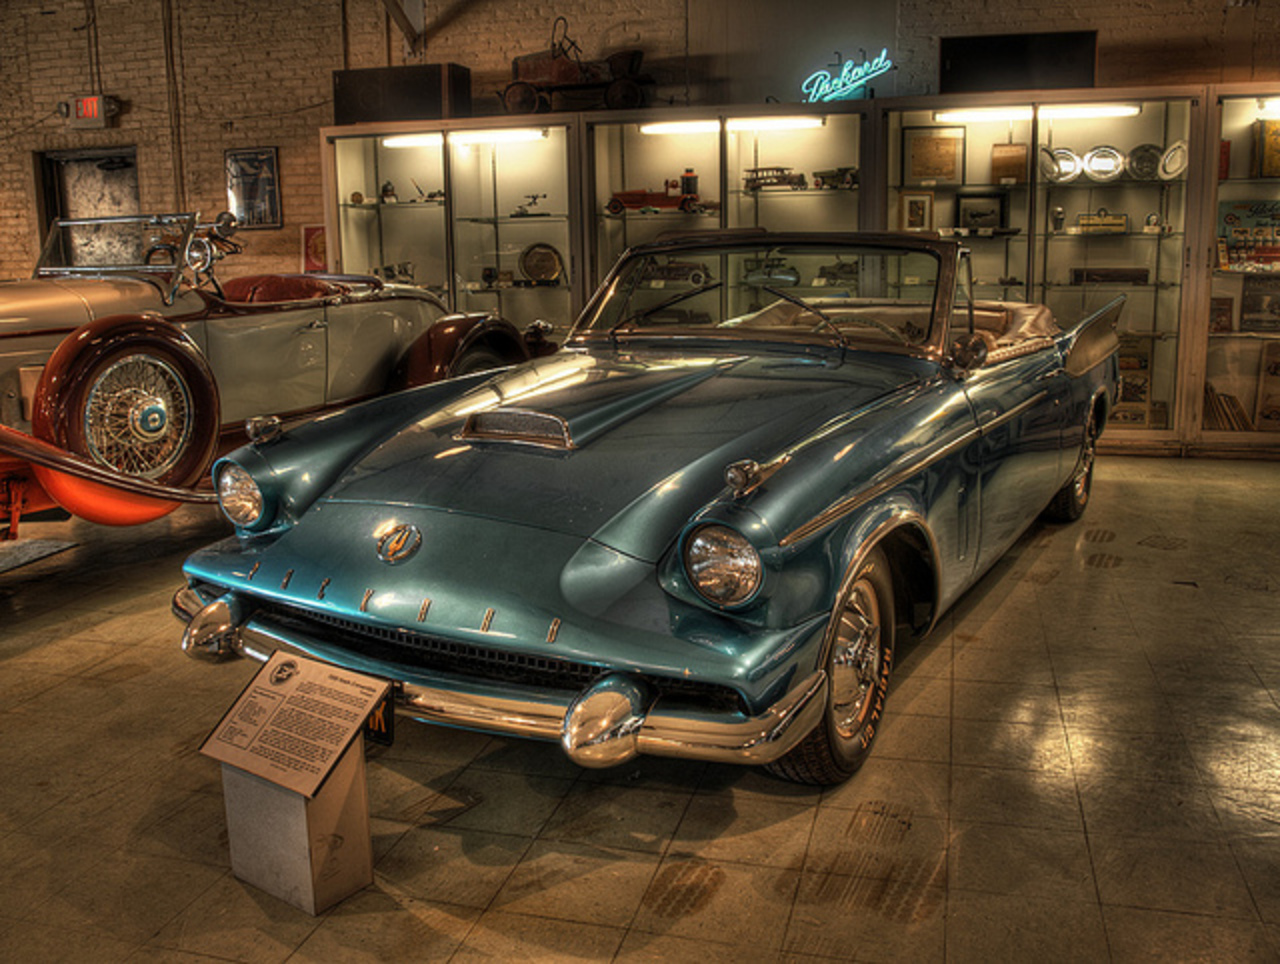 1958 Packard Hawk Convertible (Prototype) | Flickr - Photo Sharing!